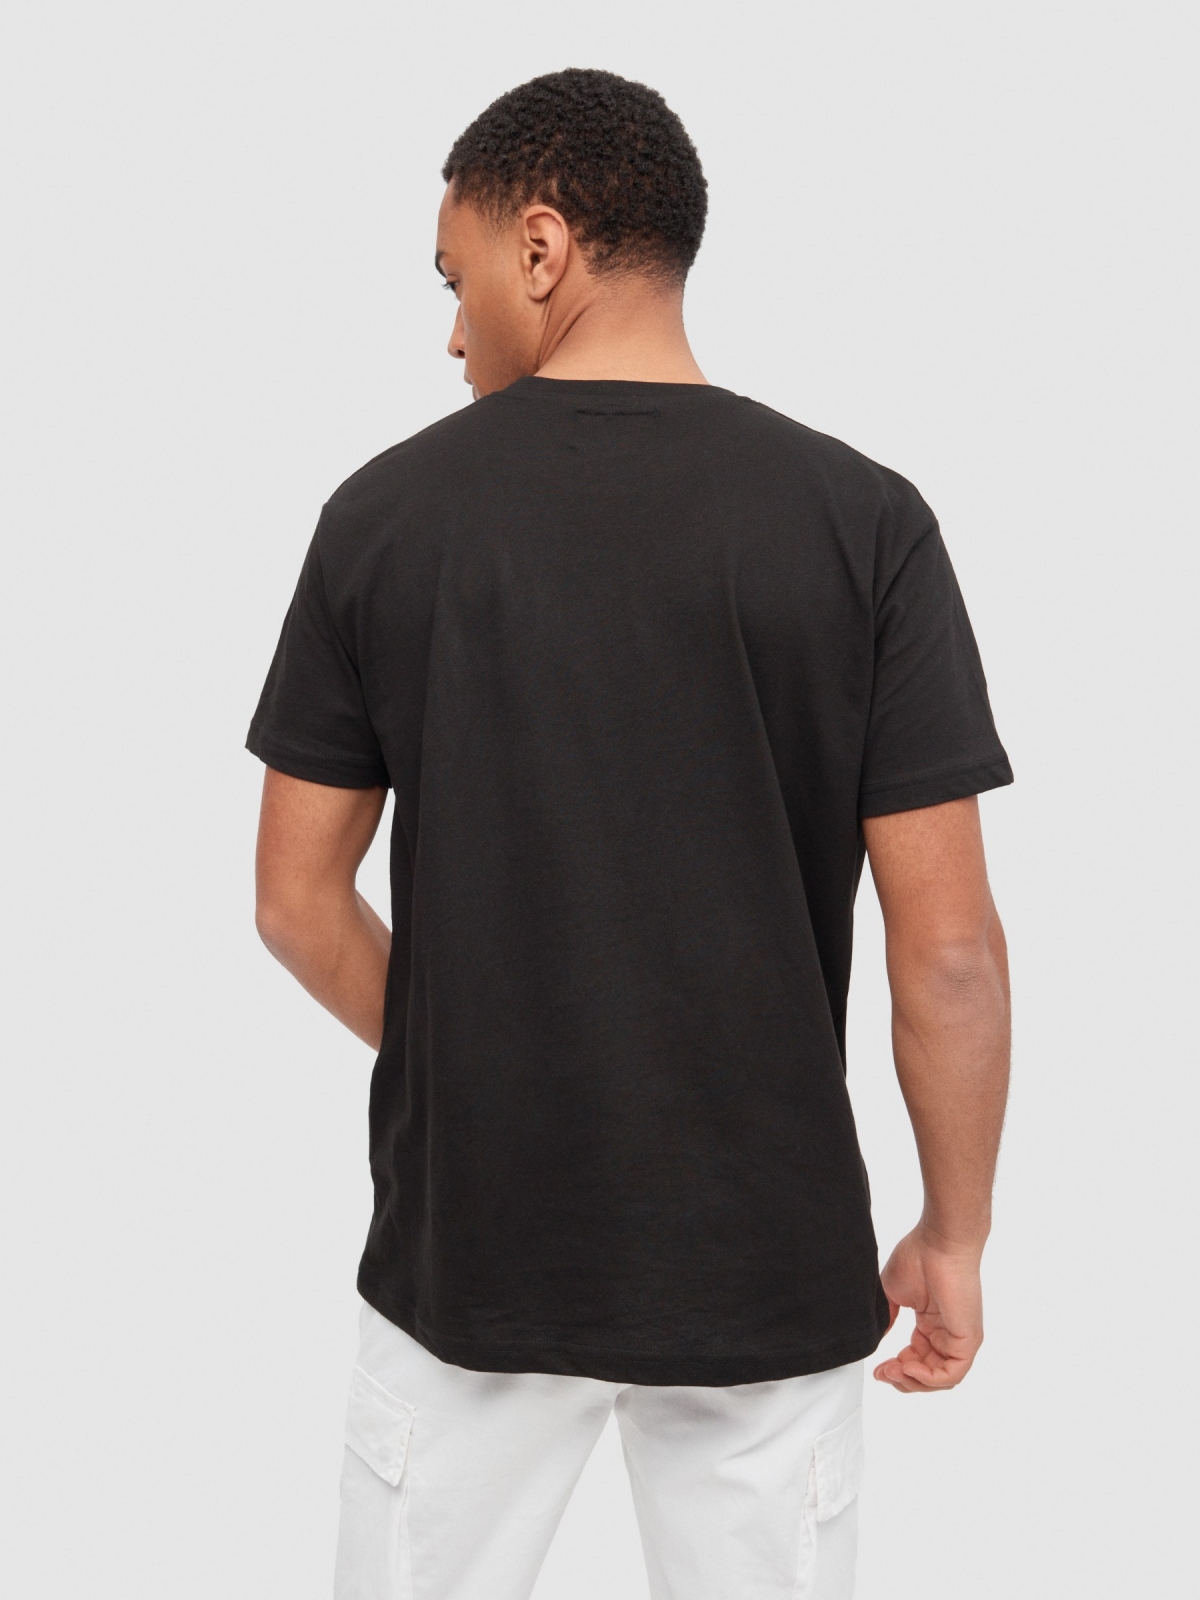 Basic T-shirt black middle back view